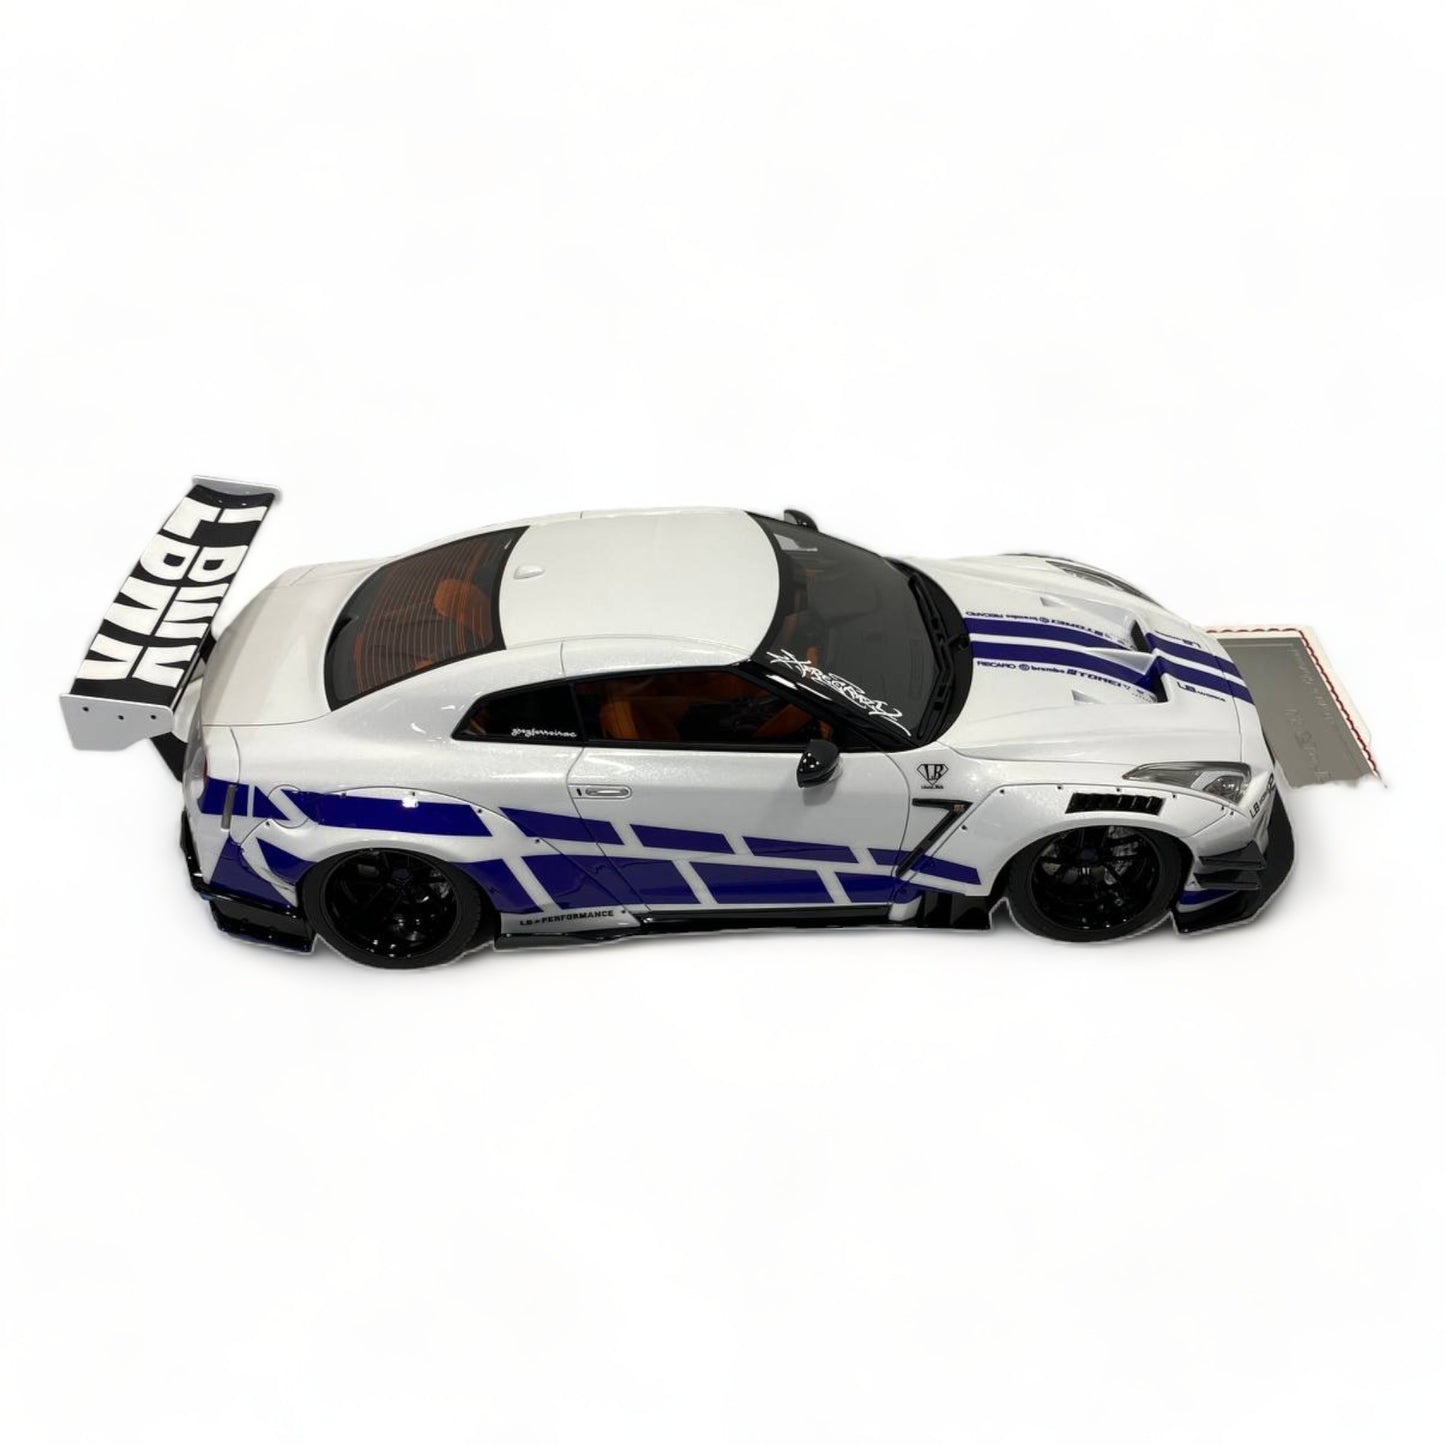 Davis & Giovanni Nissan GT-R R35 LBWK -LIMITED 20PCS WHITE|Sold in Dturman.com Dubai UAE.